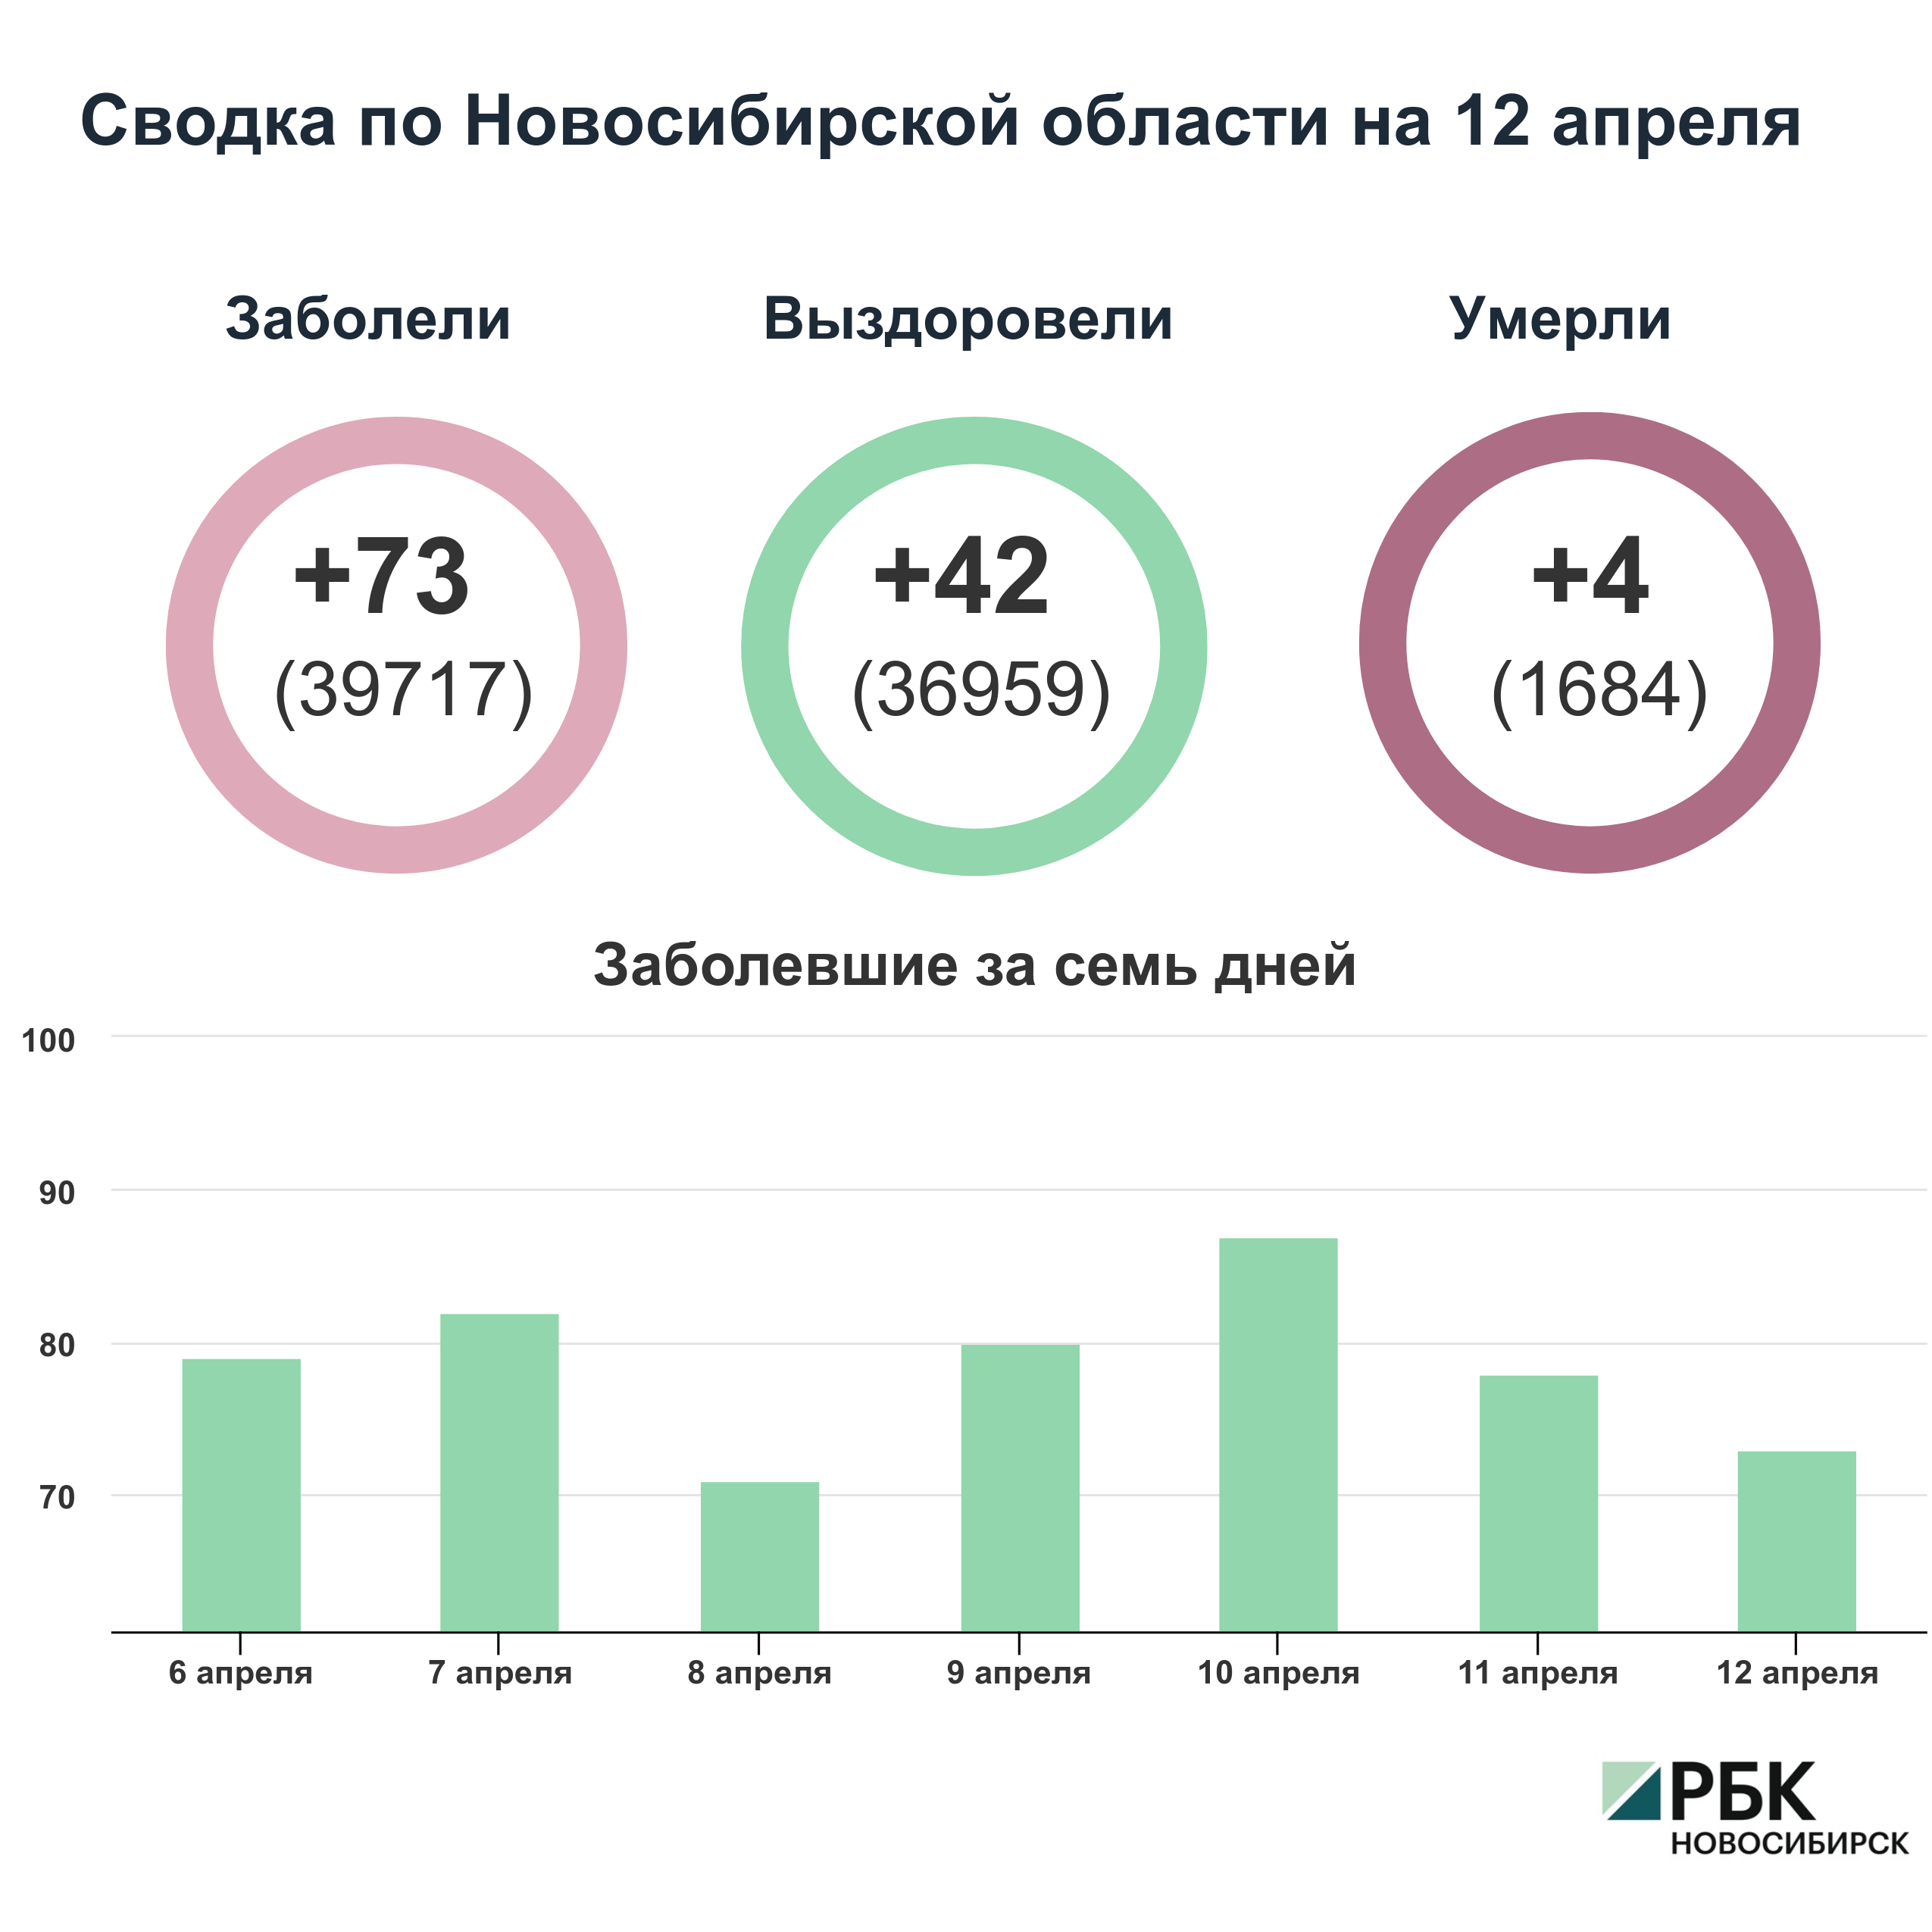 Коронавирус в Новосибирске: сводка на 12 апреля